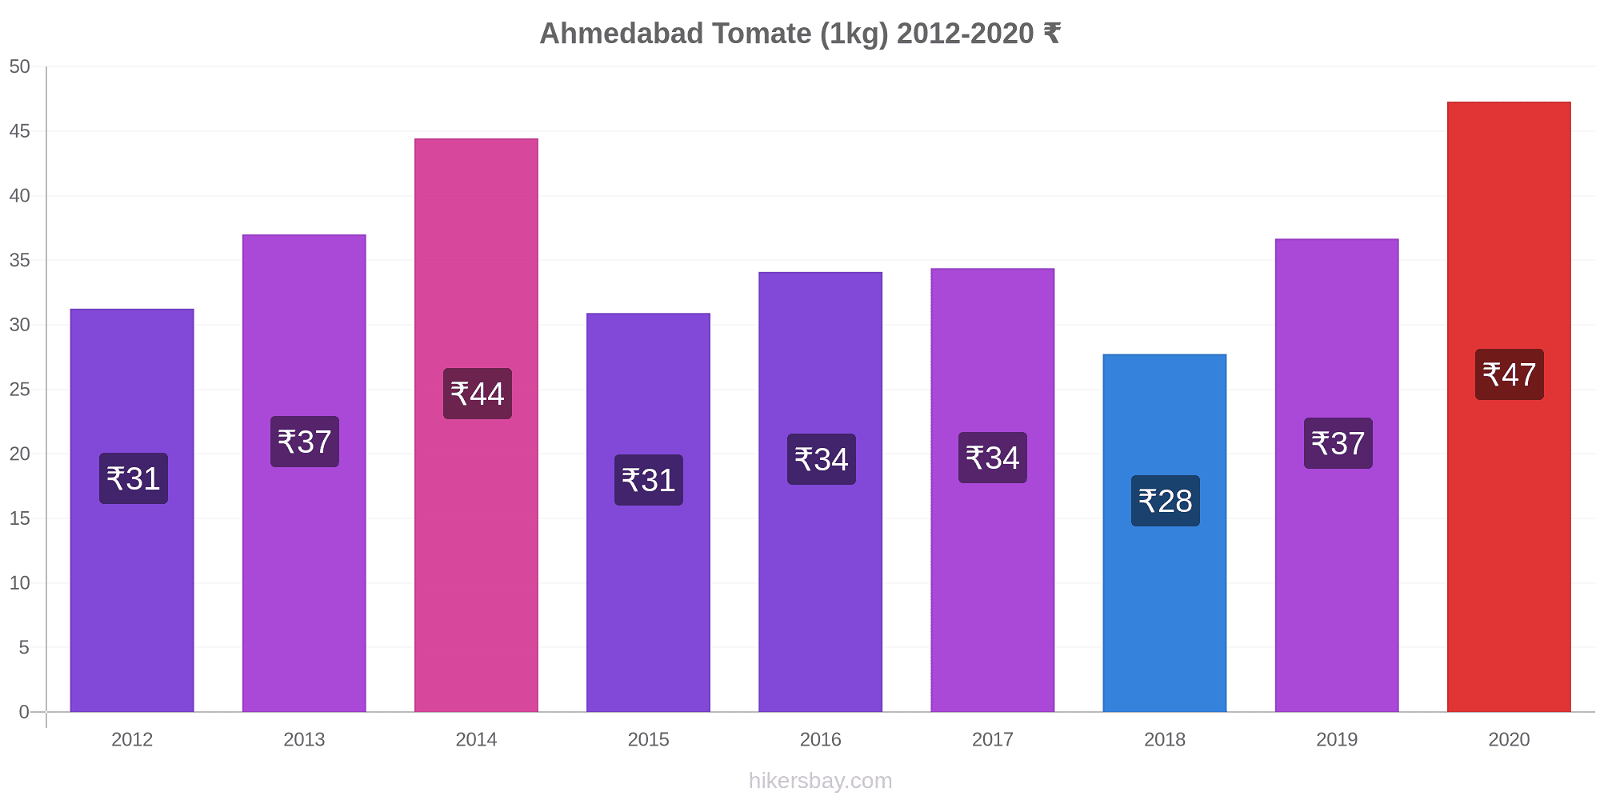 Ahmedabad changements de prix Tomate (1kg) hikersbay.com